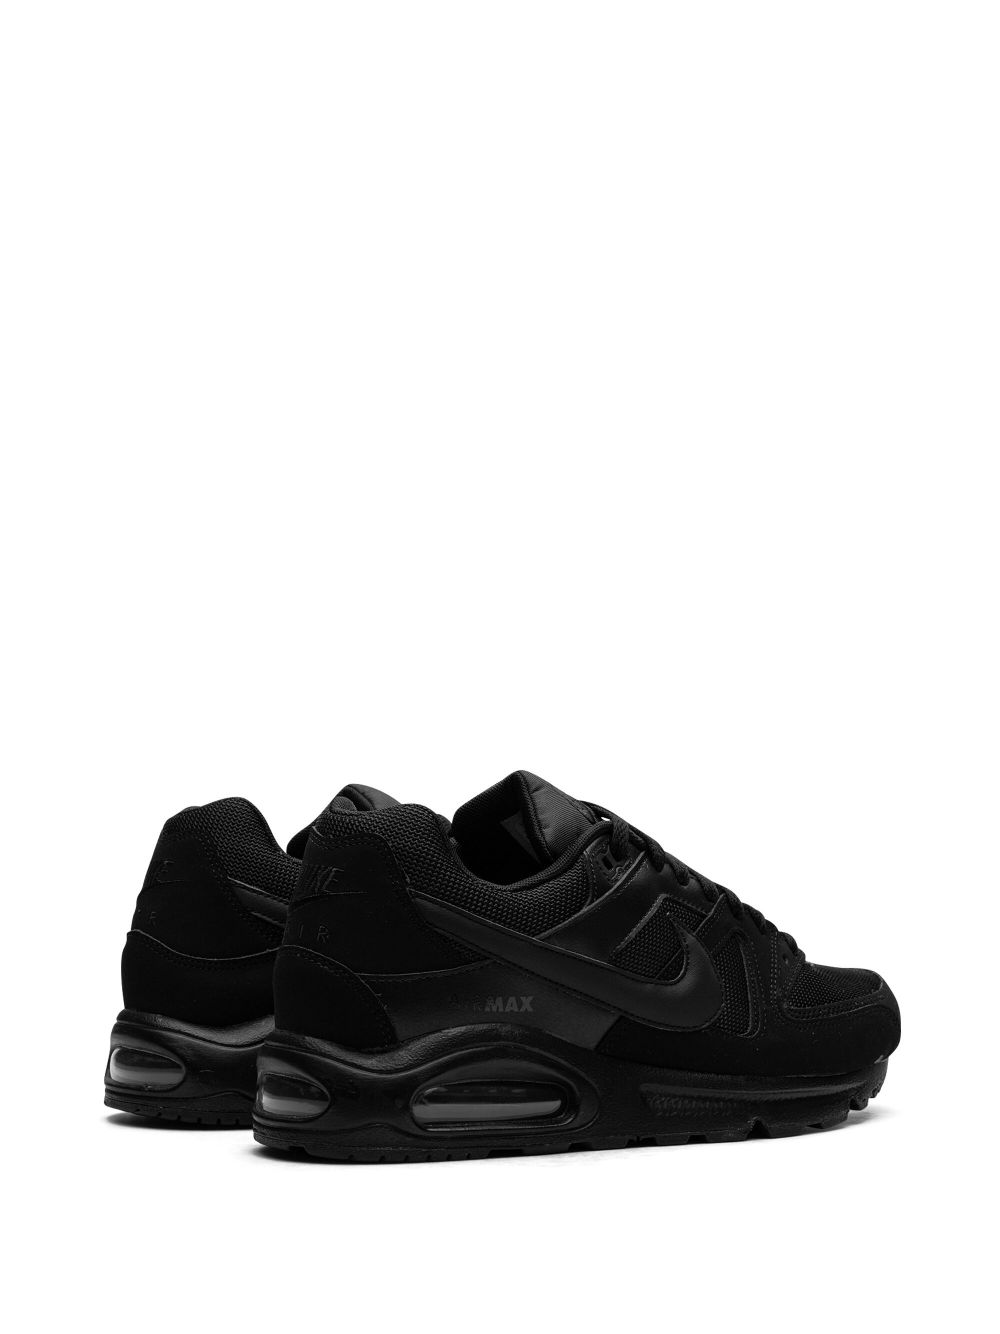 Nike Air Max Command "Triple Black" sneakers